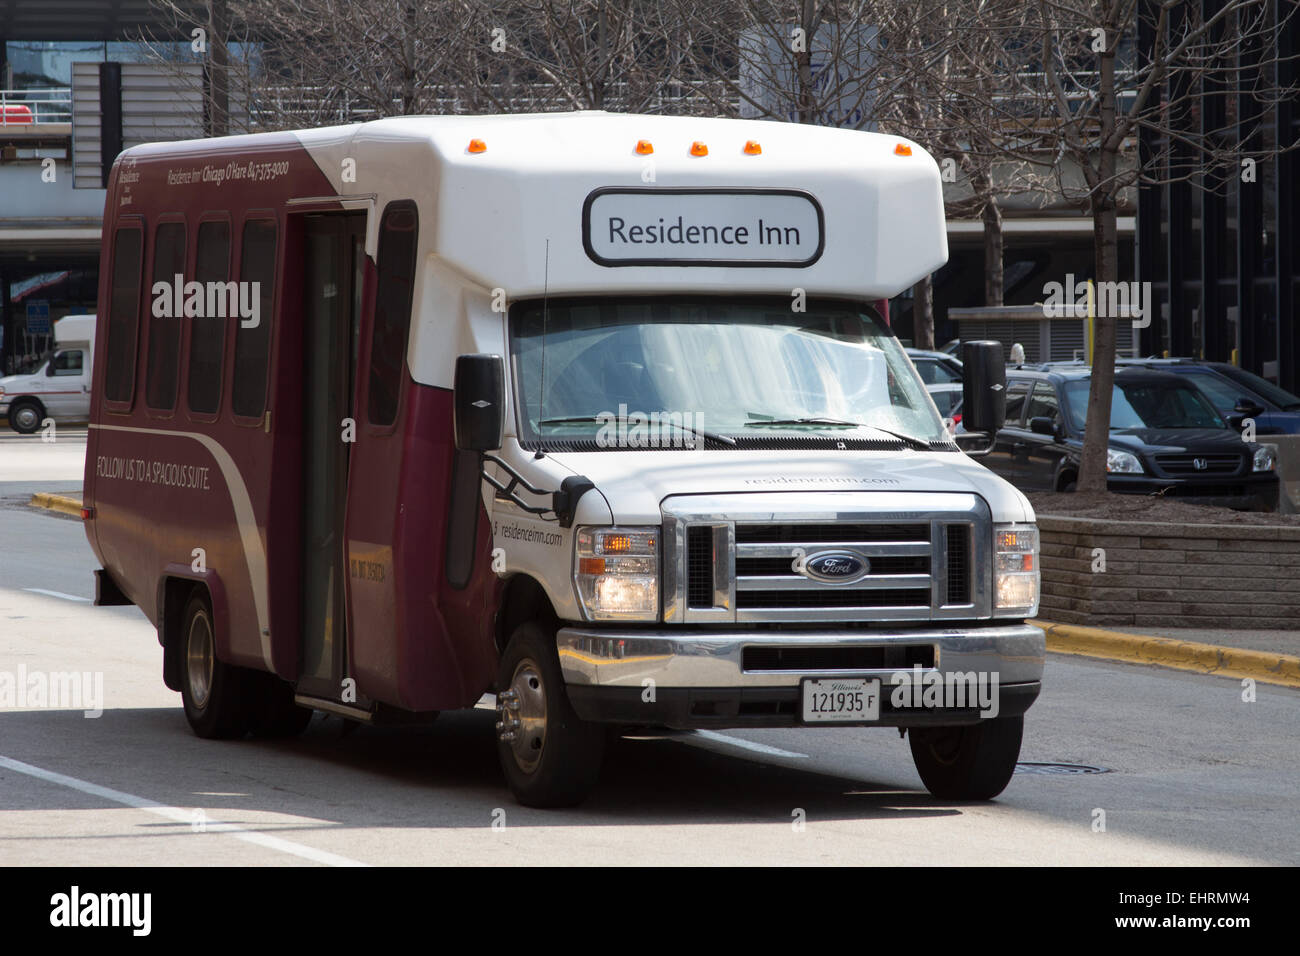 Residence Inn hotel shuttle bus at Chicago O'Hare International airport, Rosemont, Illinois, USA Stock Photo